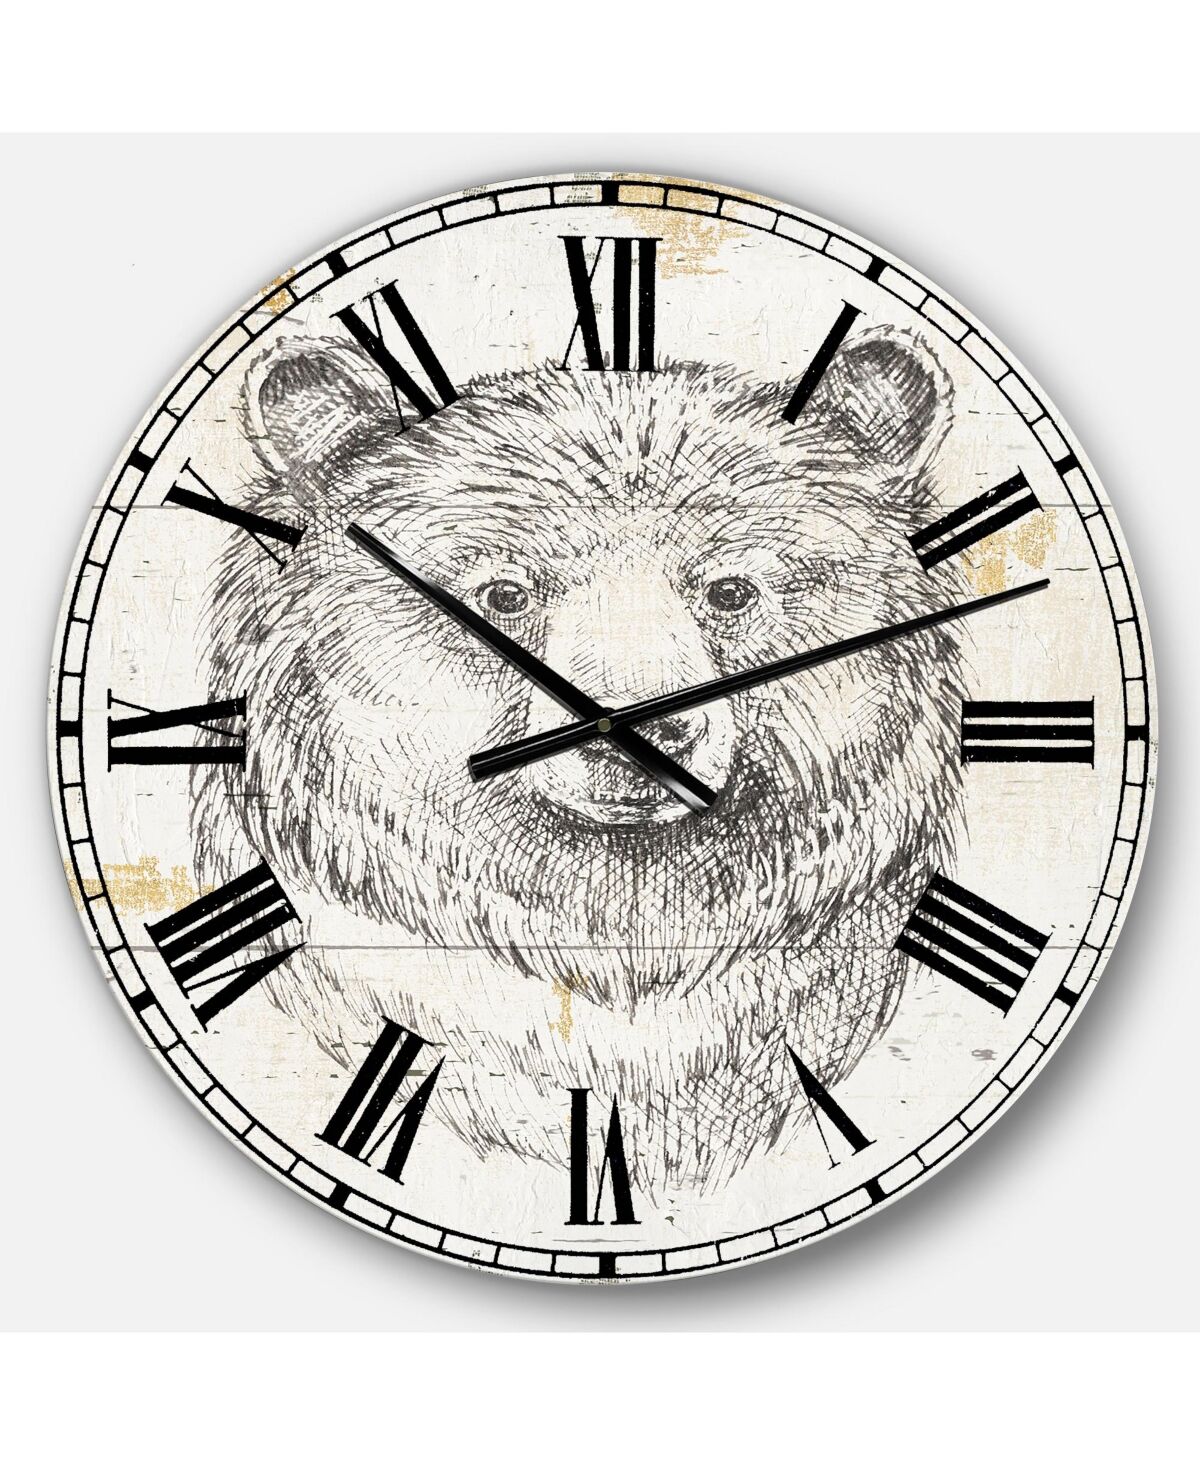 Designart Wildlife Animal Oversized Metal Wall Clock - Gray